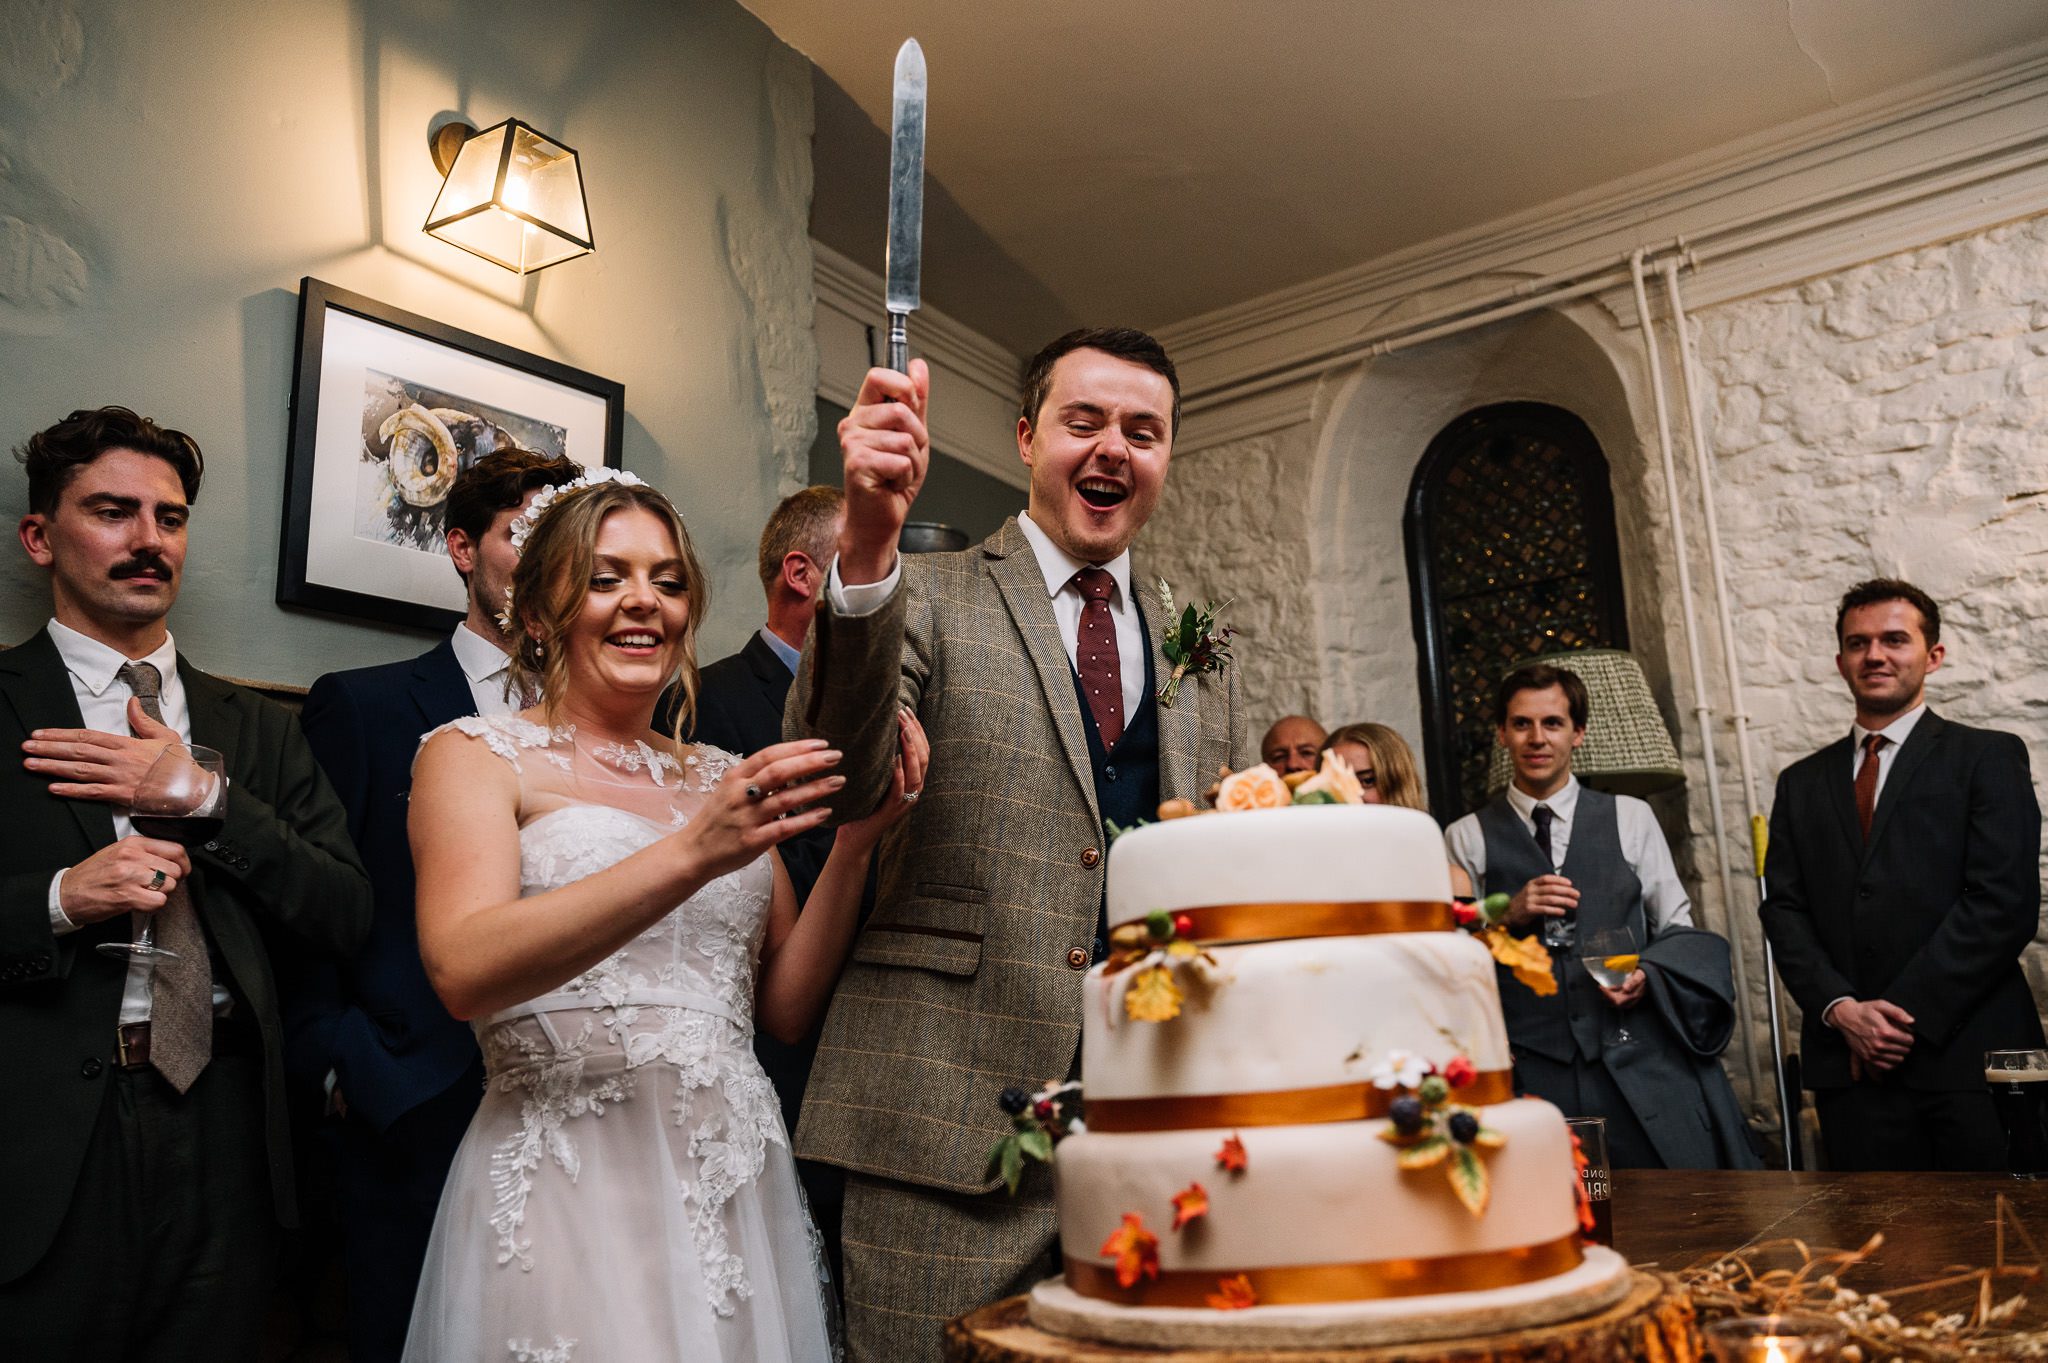 Gloucestershire wedding photographer FAQ's